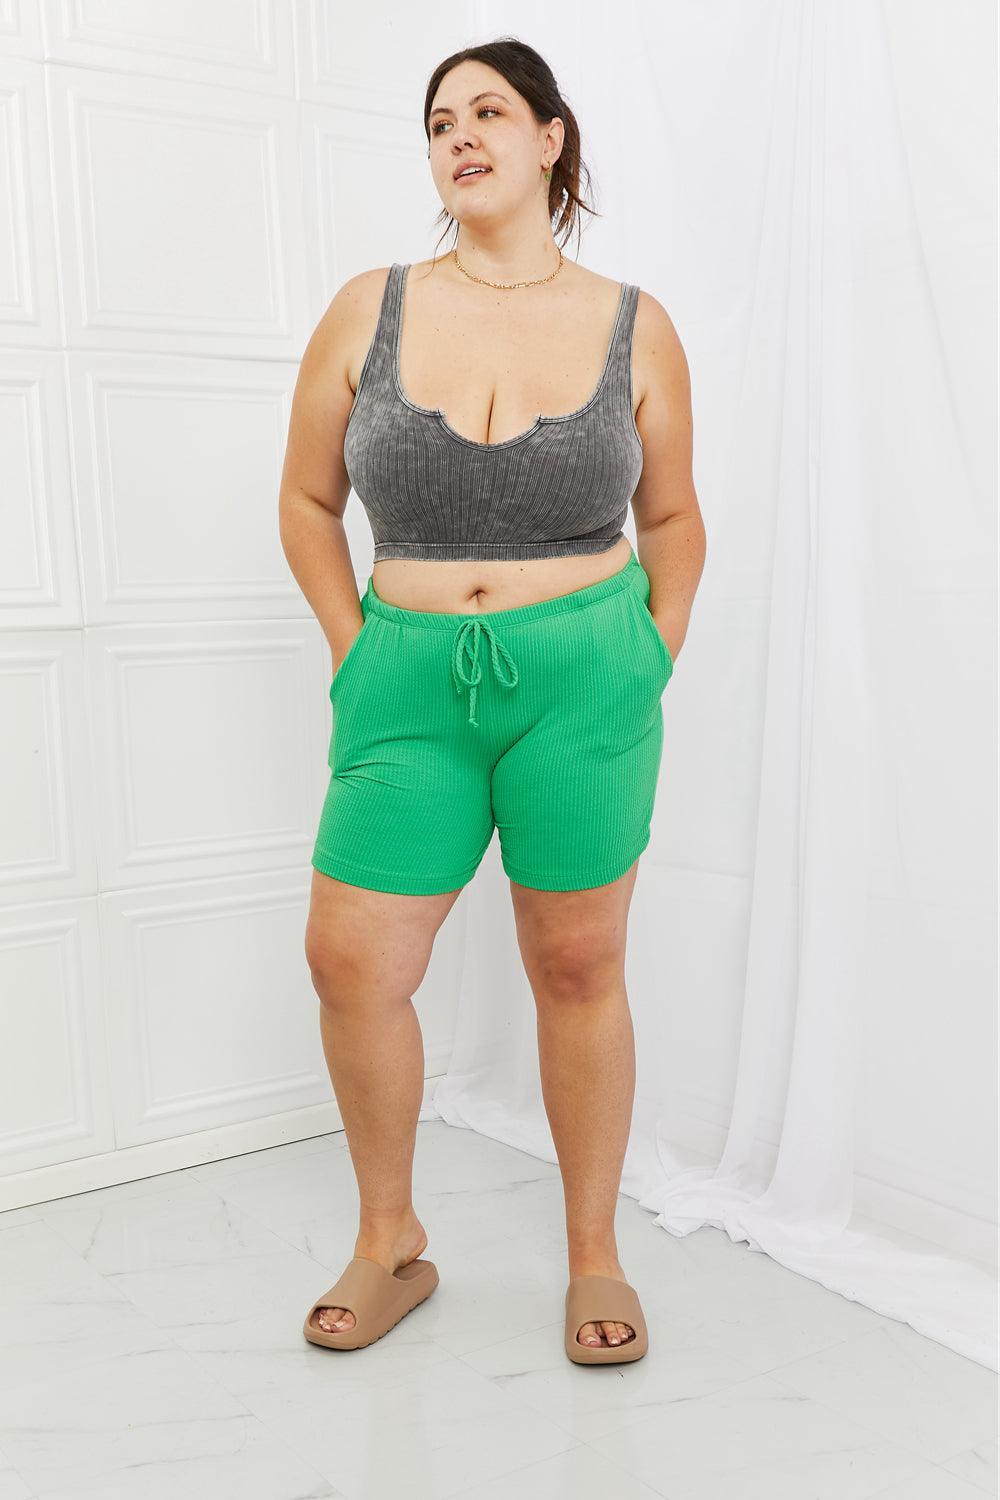 Extraverted Ribbed Plus Size Green Shorts - MXSTUDIO.COM